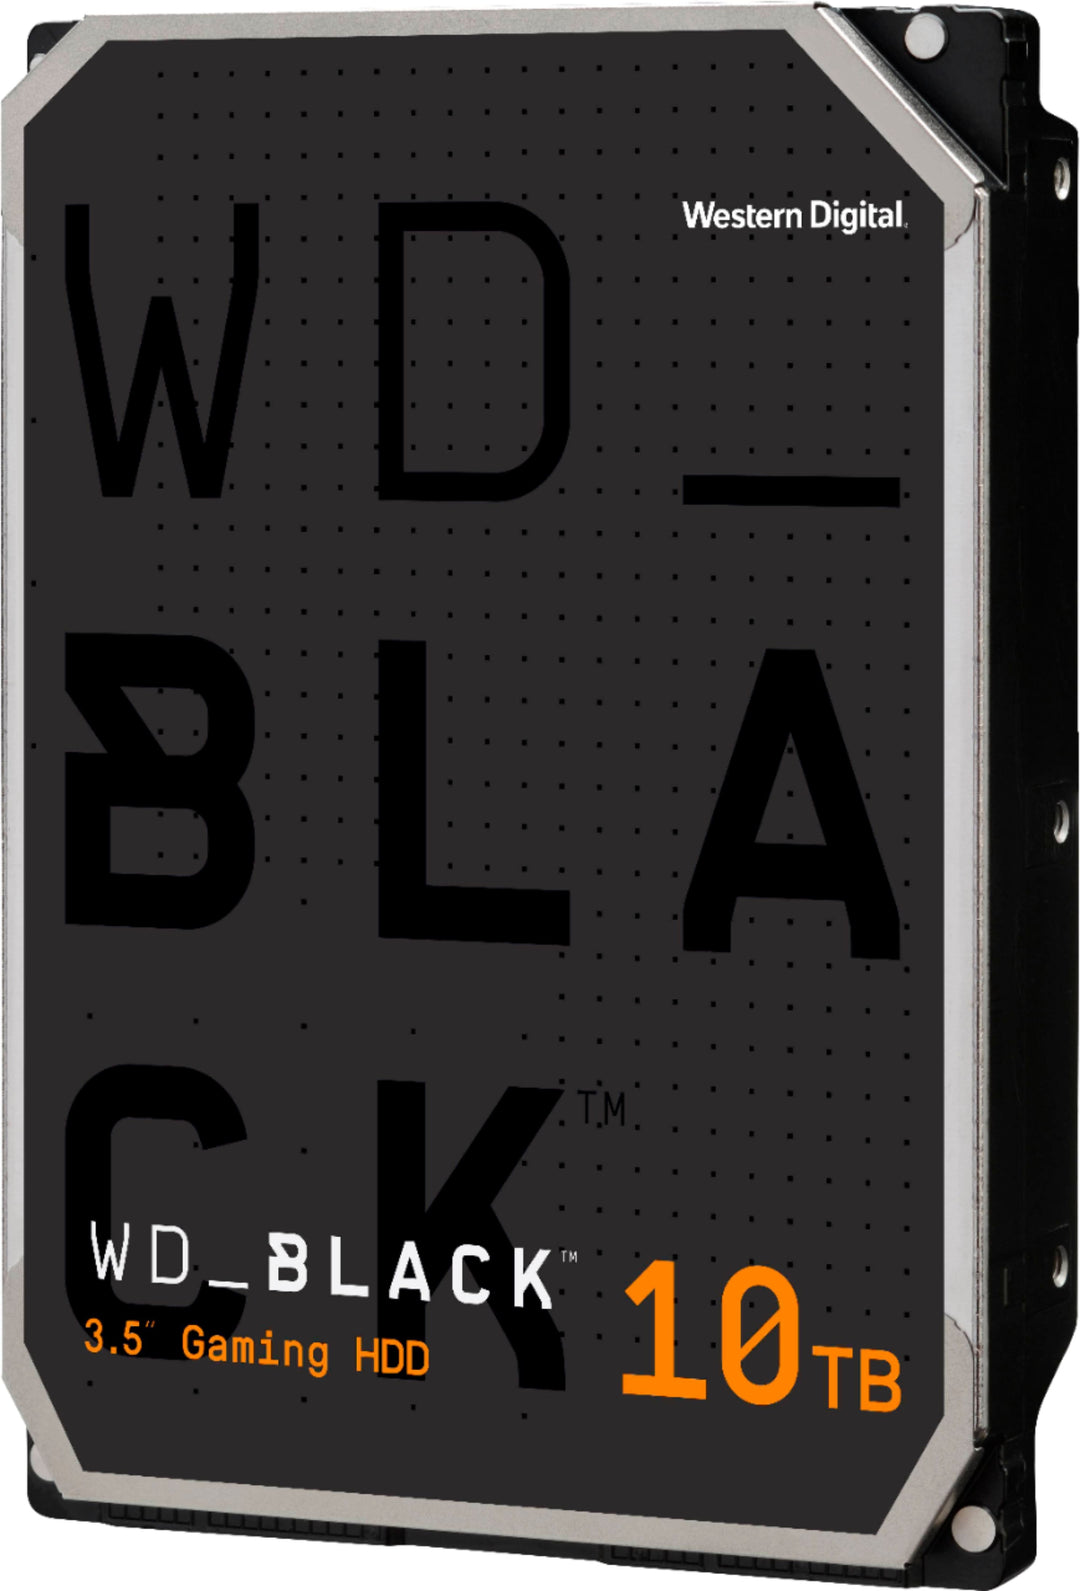 WD - BLACK Gaming 10TB Internal SATA Hard Drive for Desktops_1